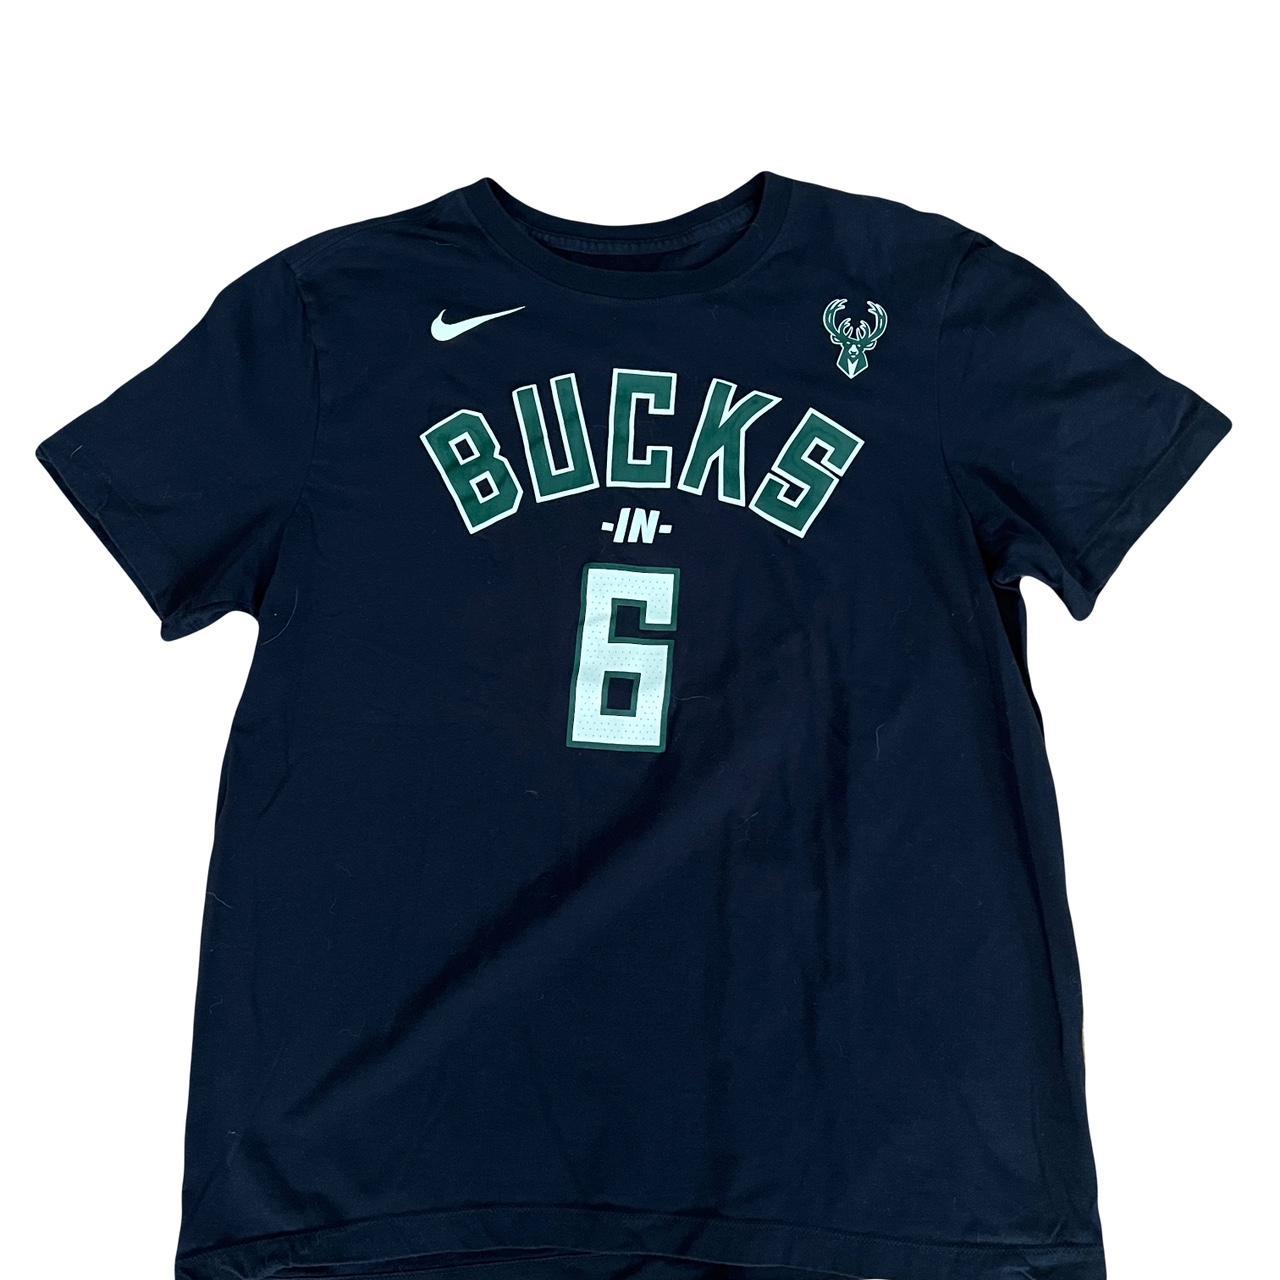 Nike Men's Milwaukee Bucks Grey Practice T-Shirt